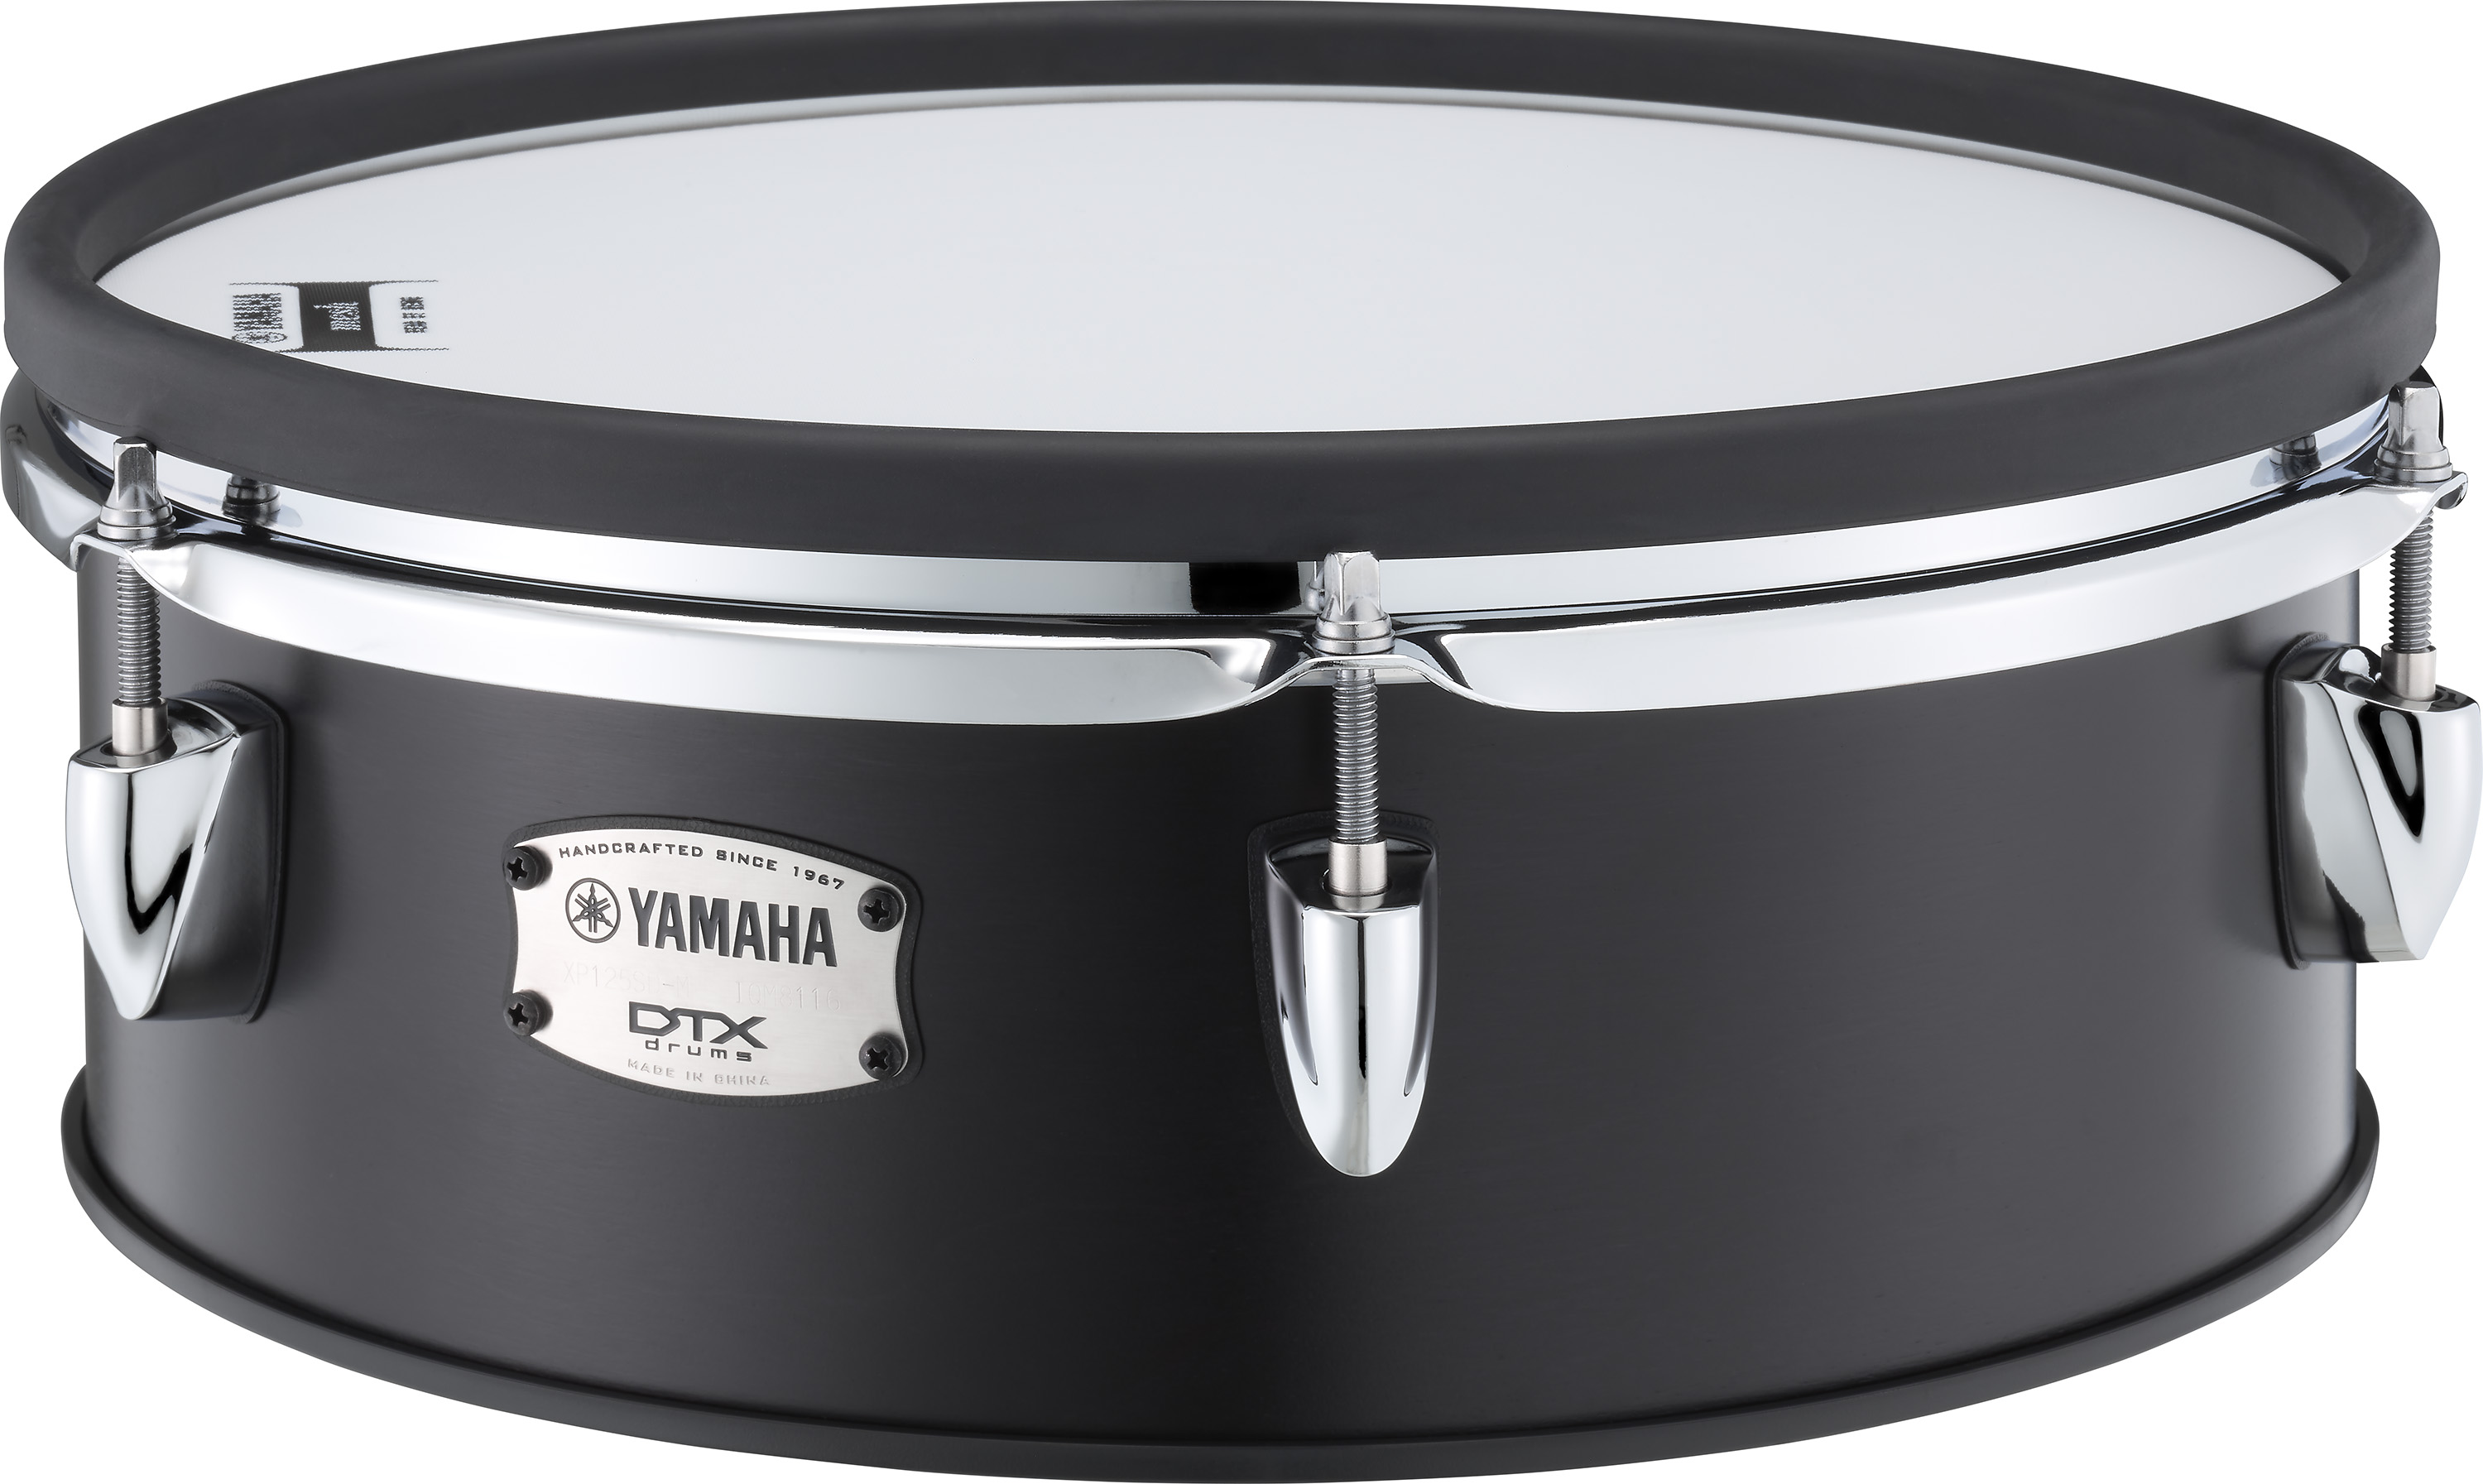 Yamaha Dtx8-km Electronic Drum Kit Mesh Black Forrest - Elektronisch drumstel - Variation 1